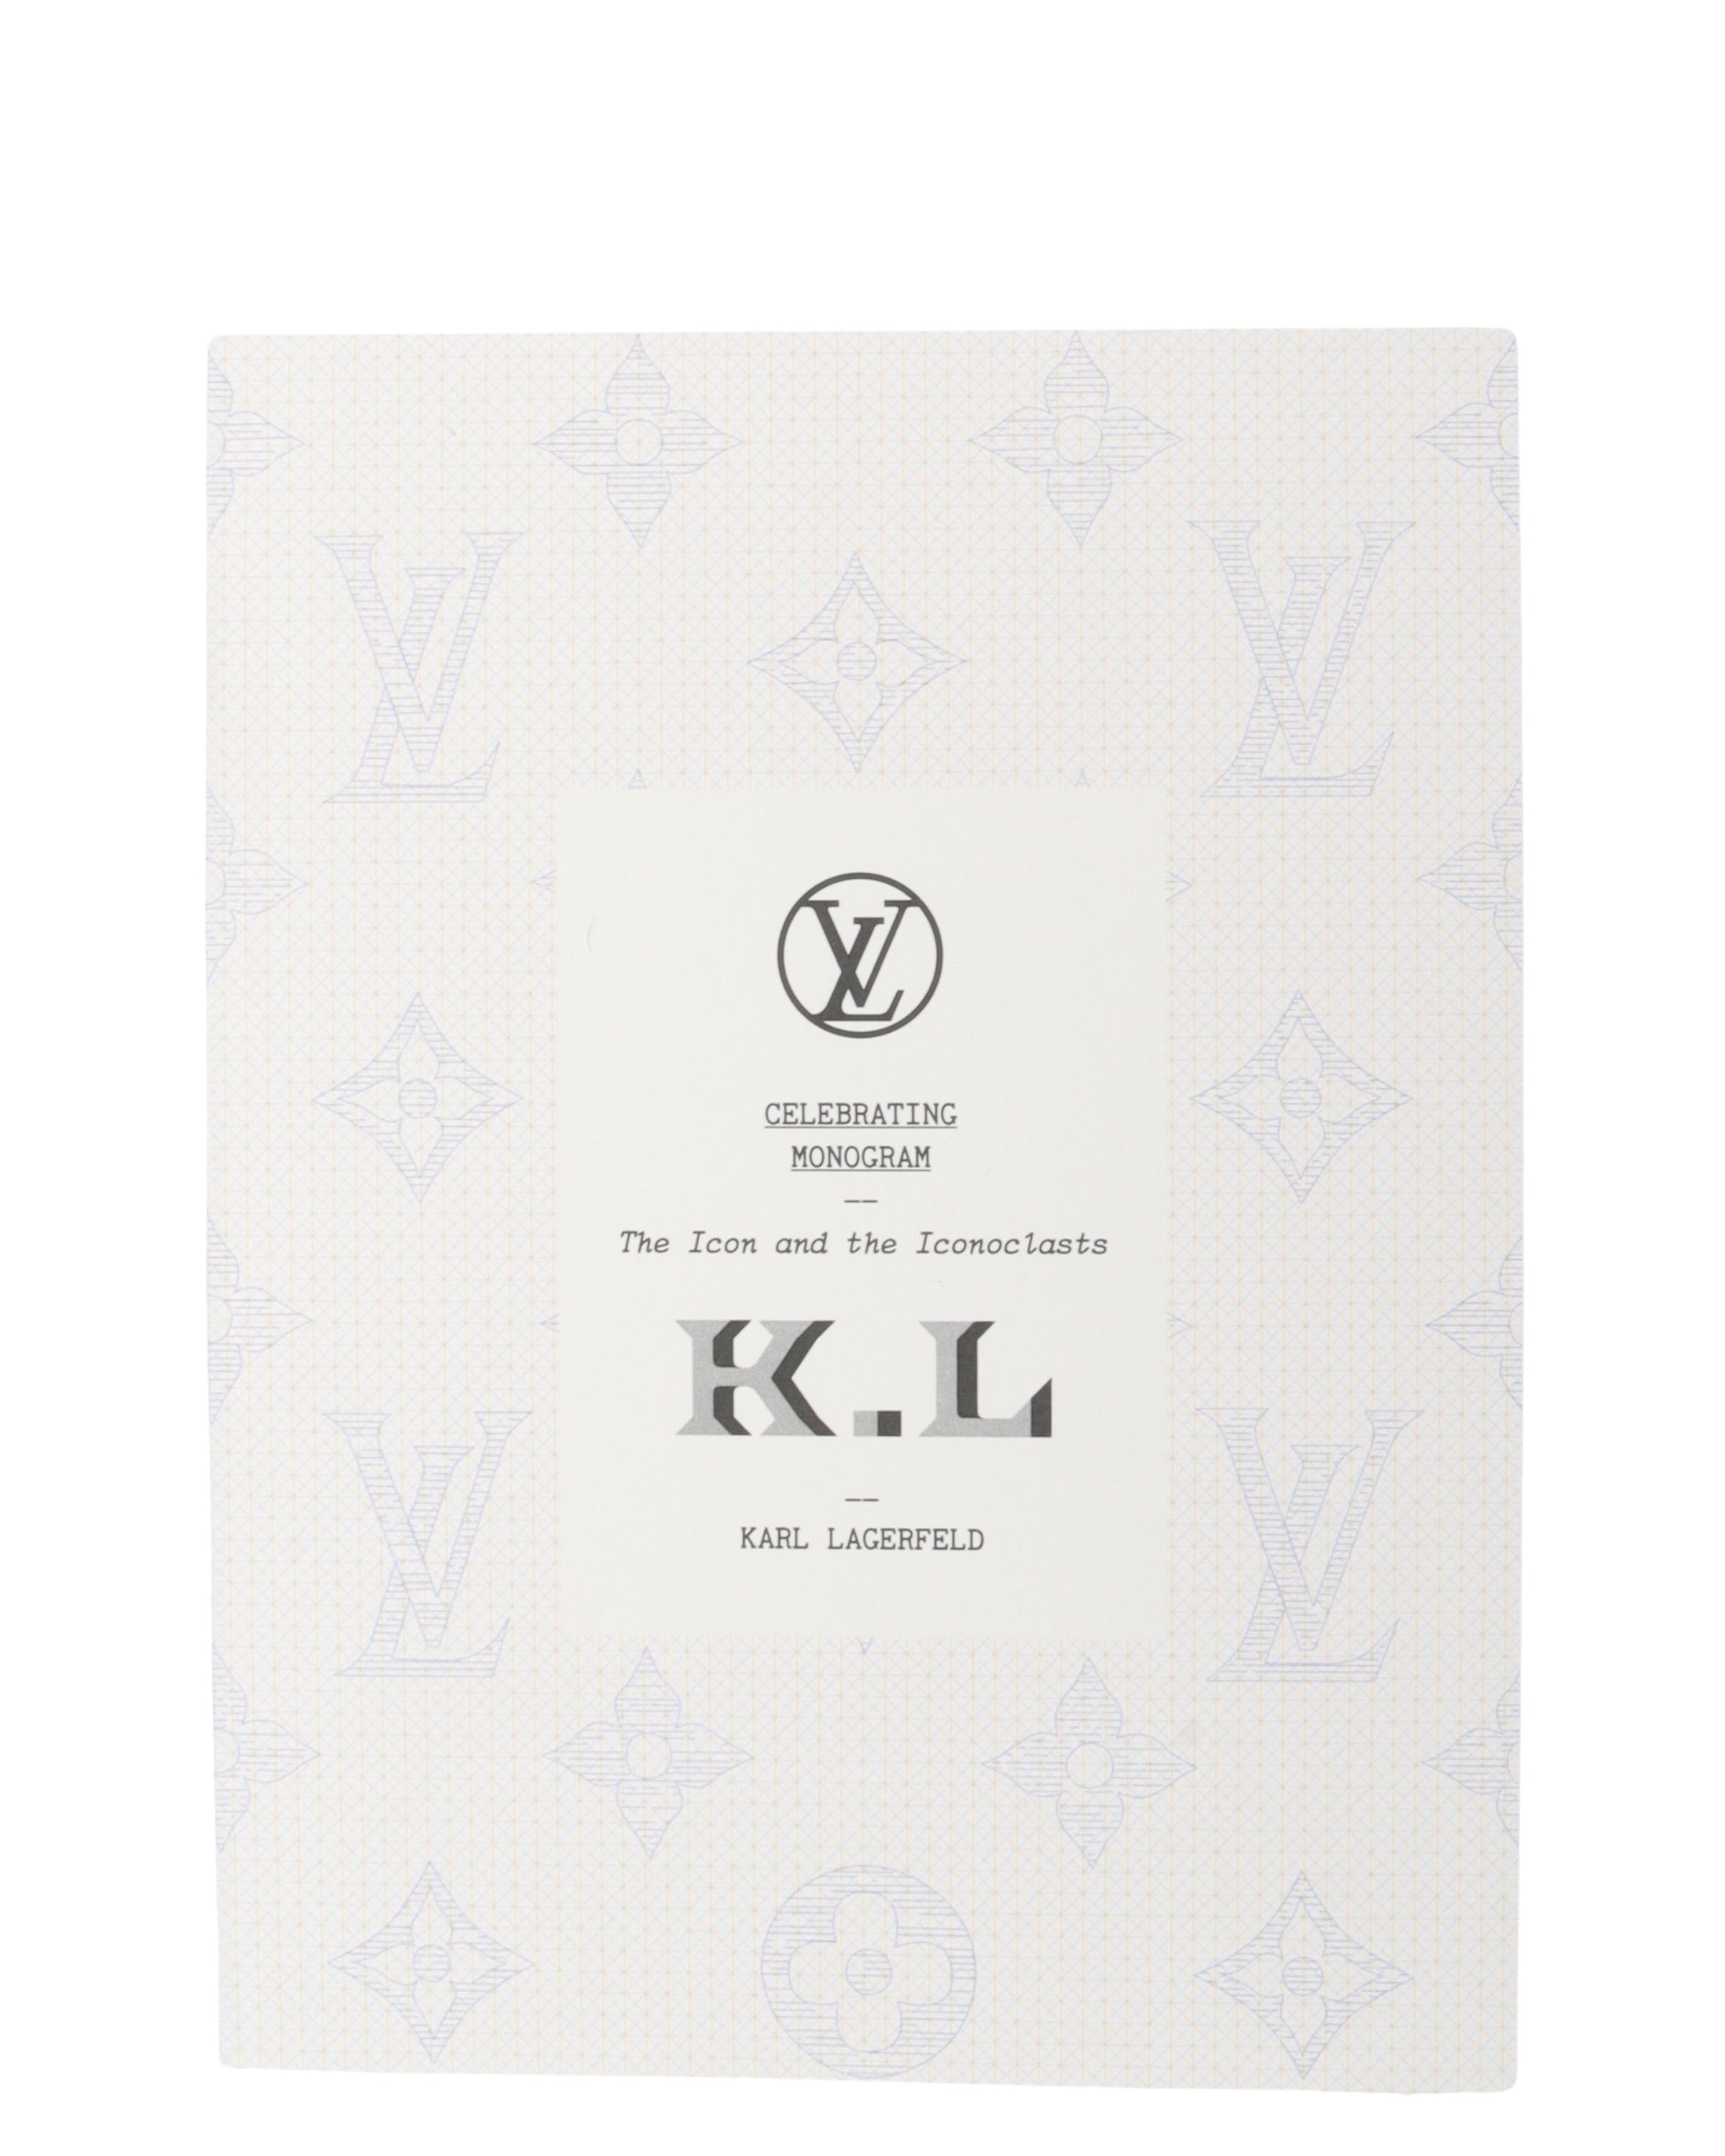 Louis Vuitton - Karl Lagerfeld Boxing Gloves.#karllagerfeld #boxing # boxinggloves #boxinglove